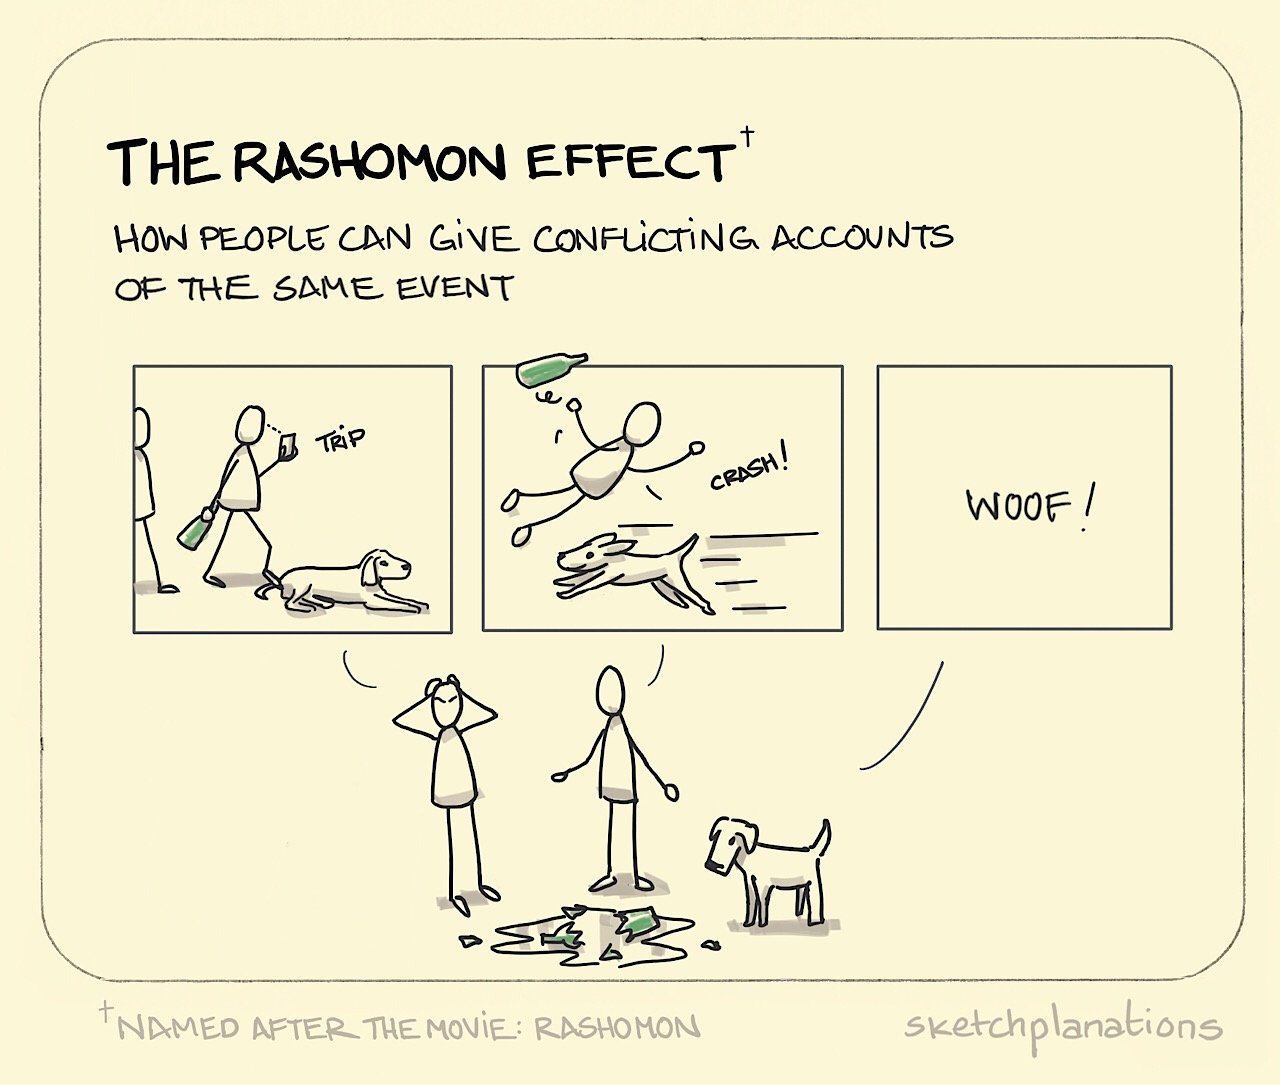 Source: Sketchplanations, https://sketchplanations.com/the-rashomon-effect